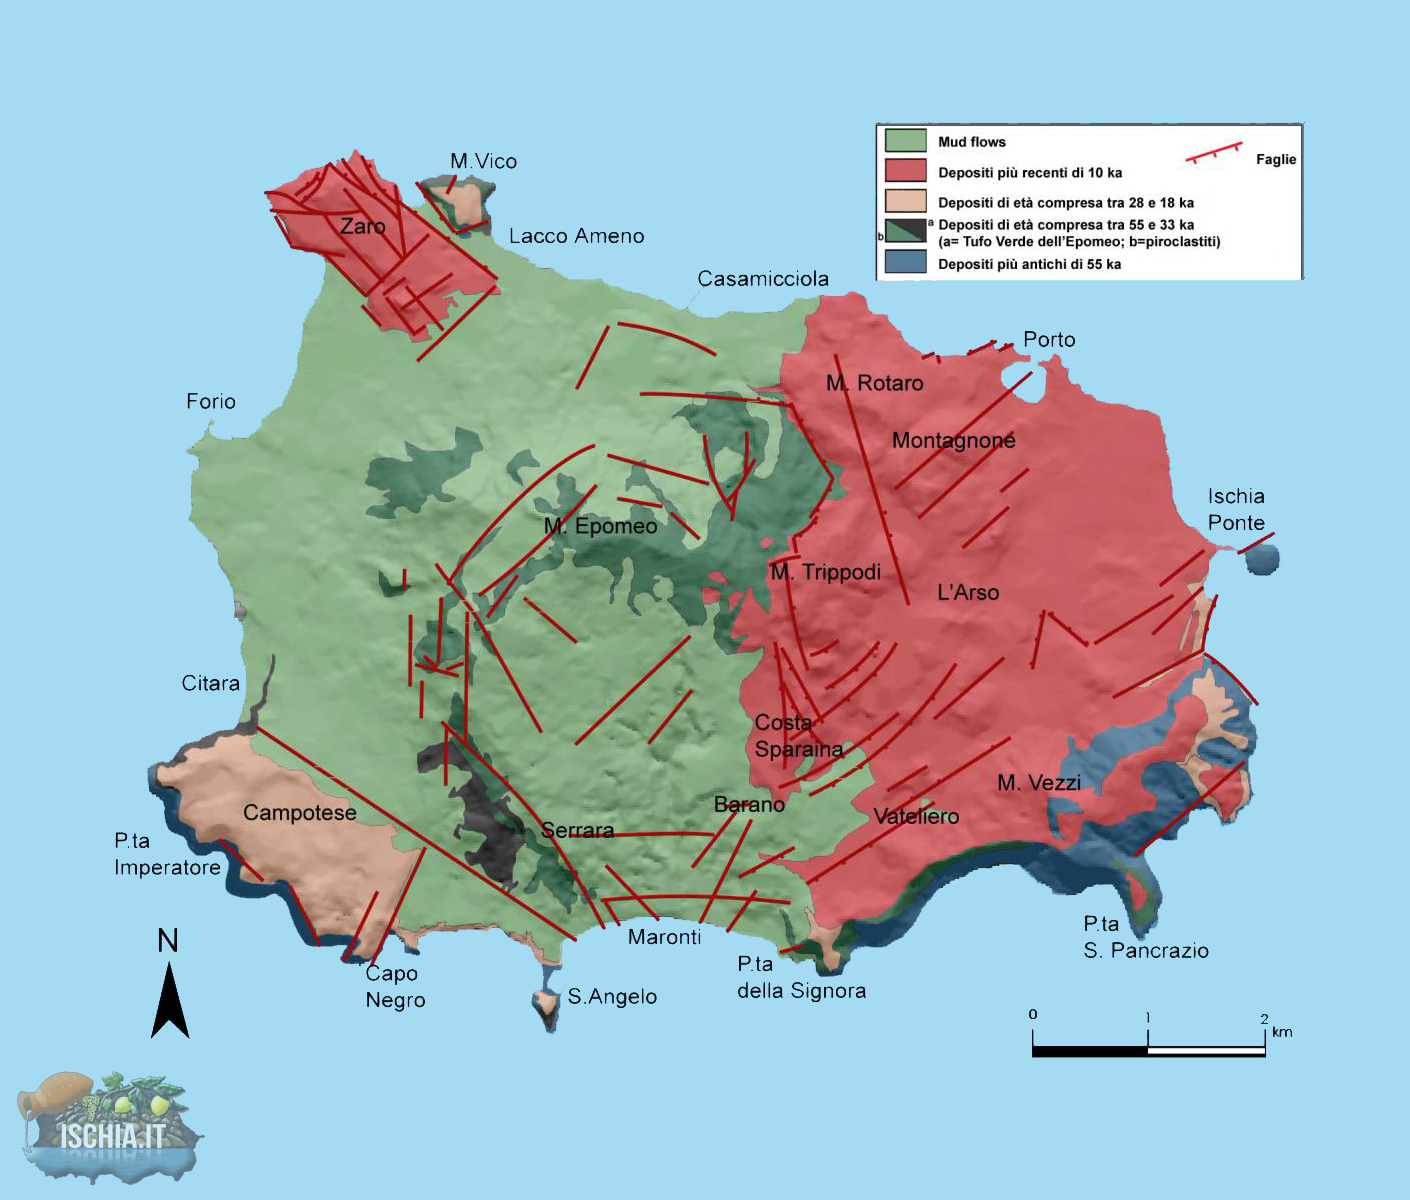 Carta geologico-strutturaledel sistema vulcanico dell’isola d’Ischia